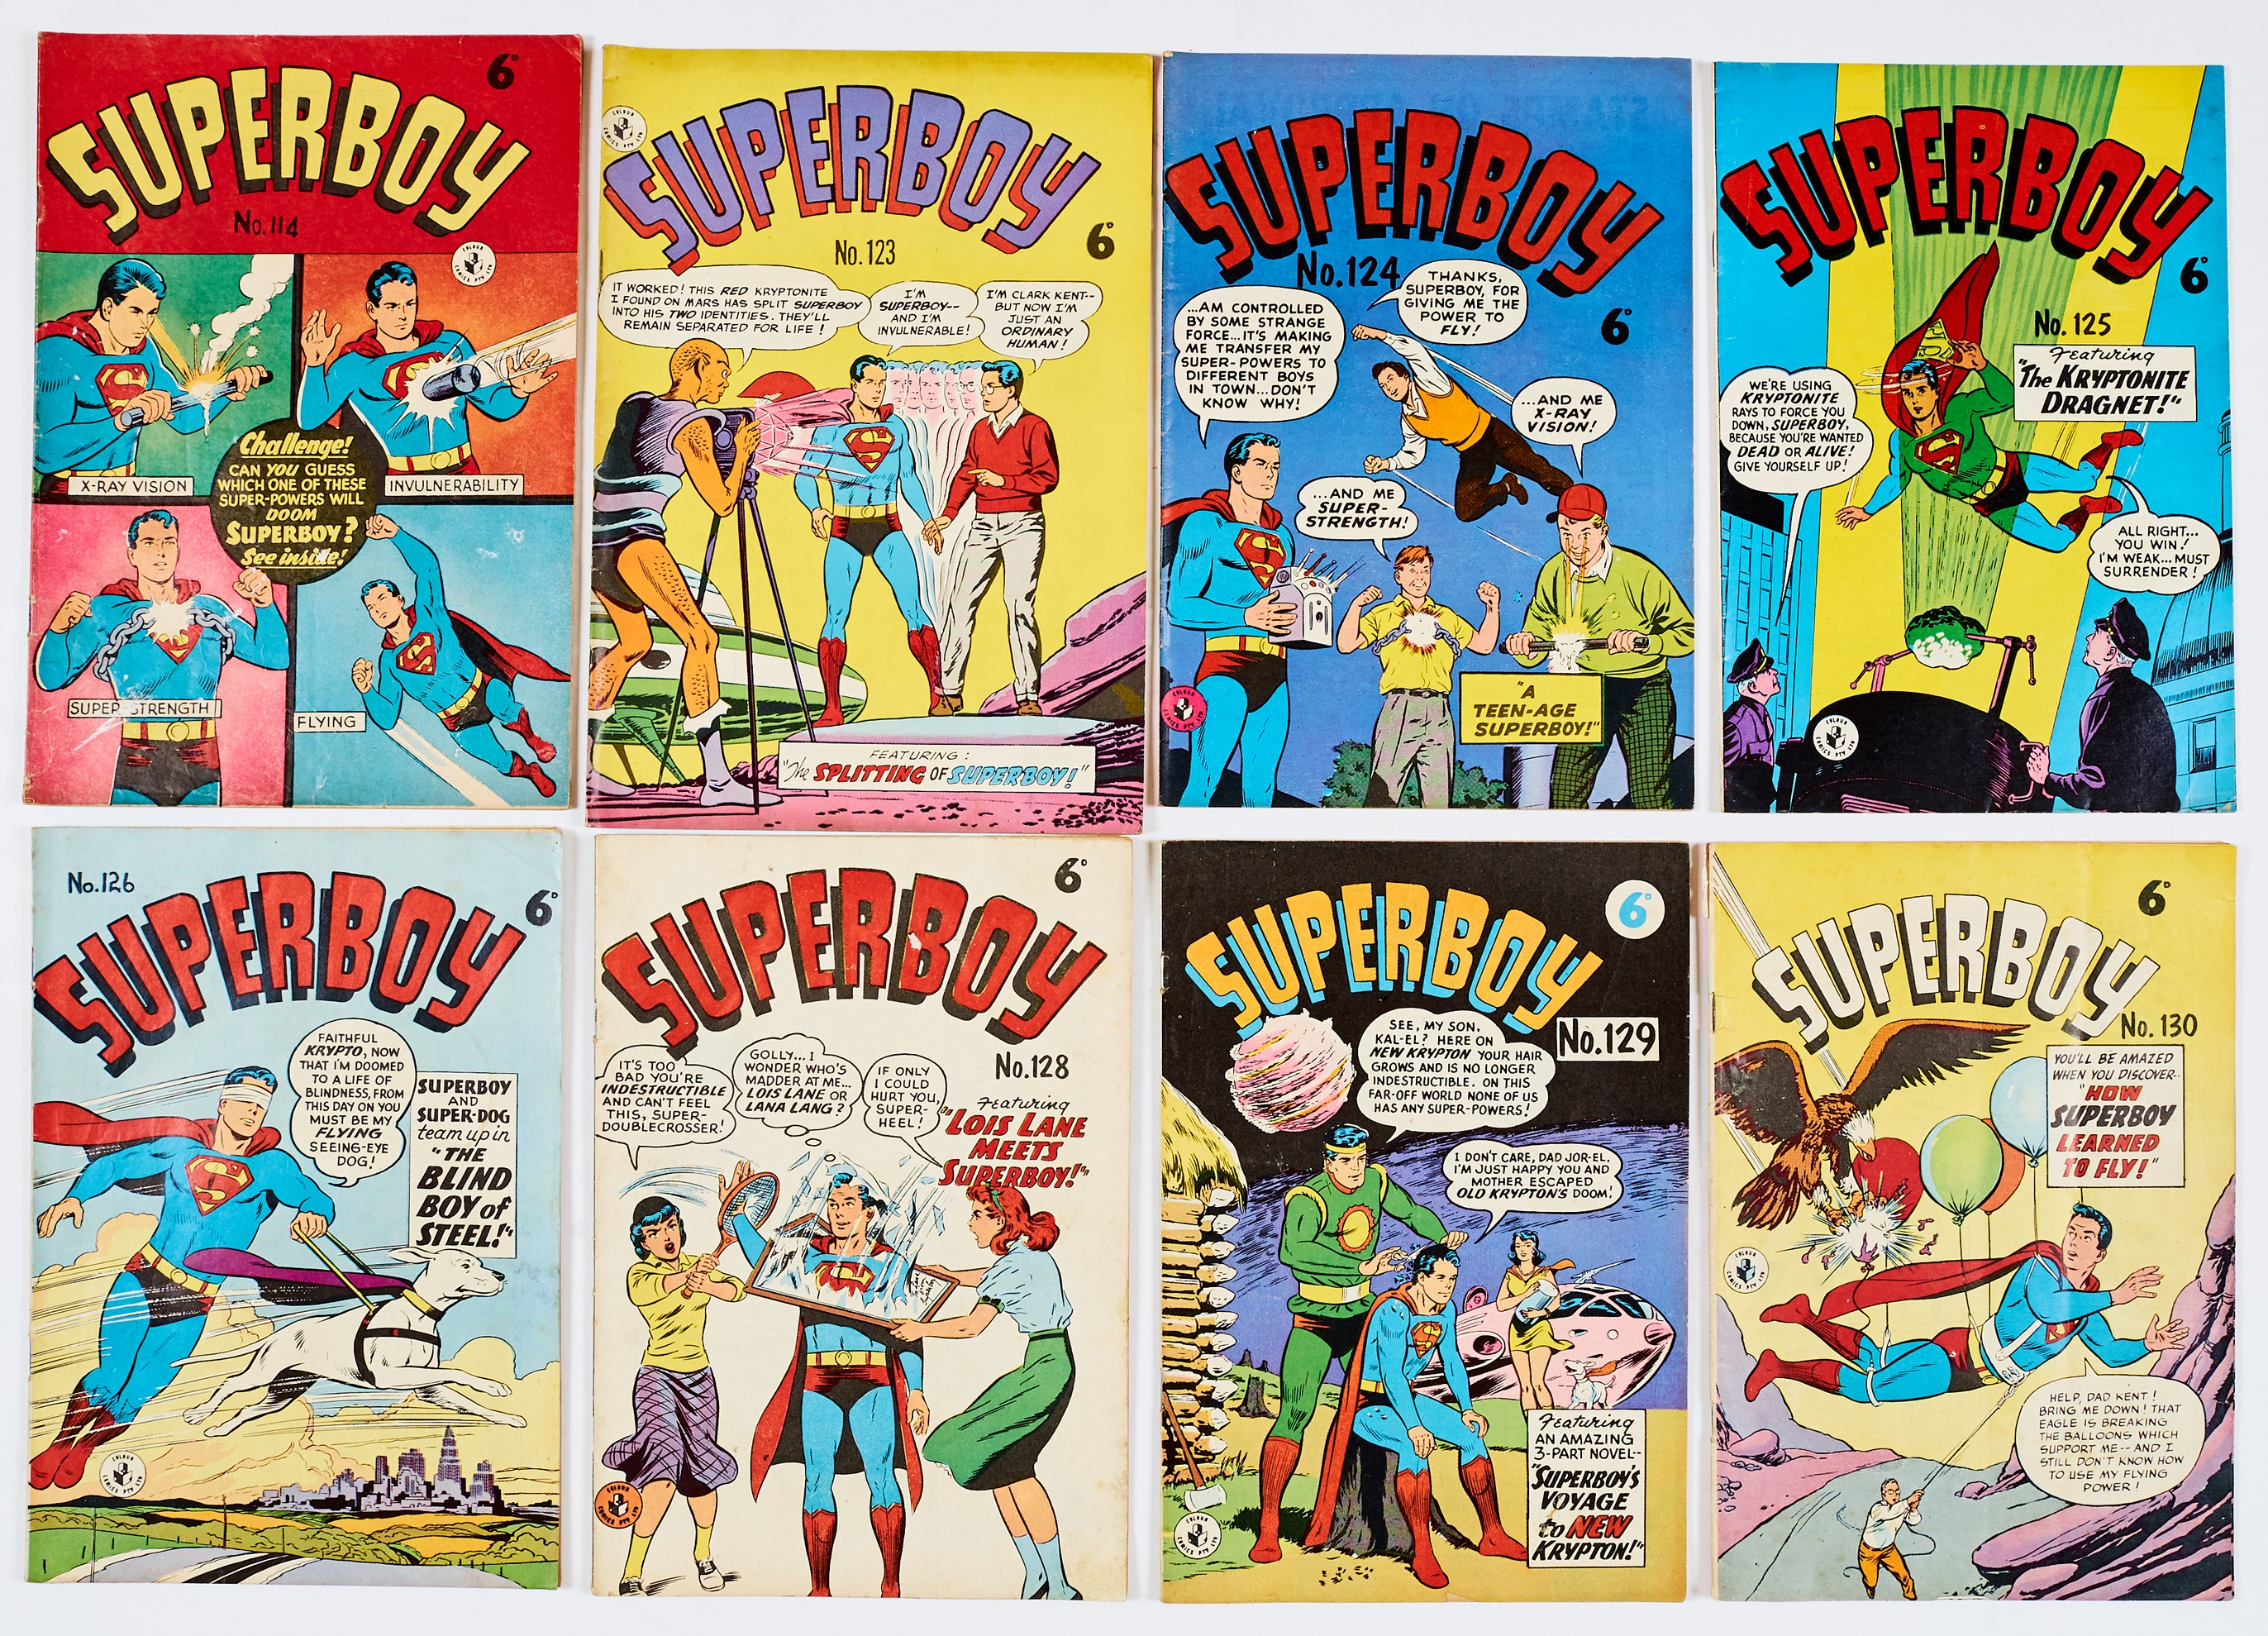 Superboy (1950s-60s K.G. Murray, Sydney) 114, 123-126, 128, 129, 130 (double cover) [vg/fn+] (8)